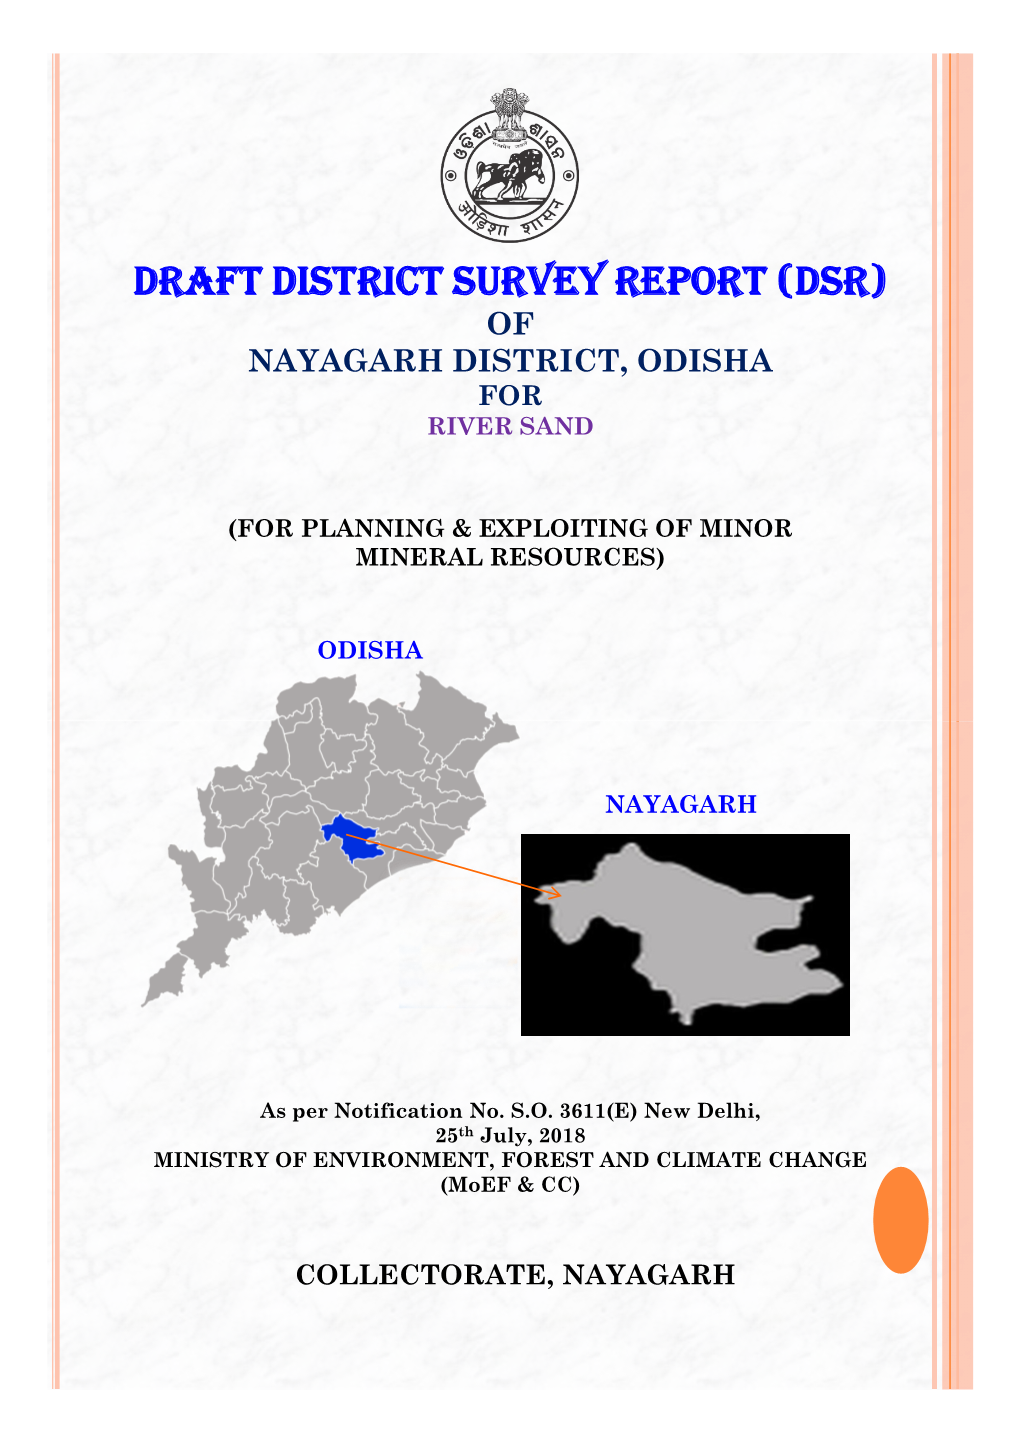 Draft District Survey Report (Dsr) of Nayagarh District, Odisha for River Sand